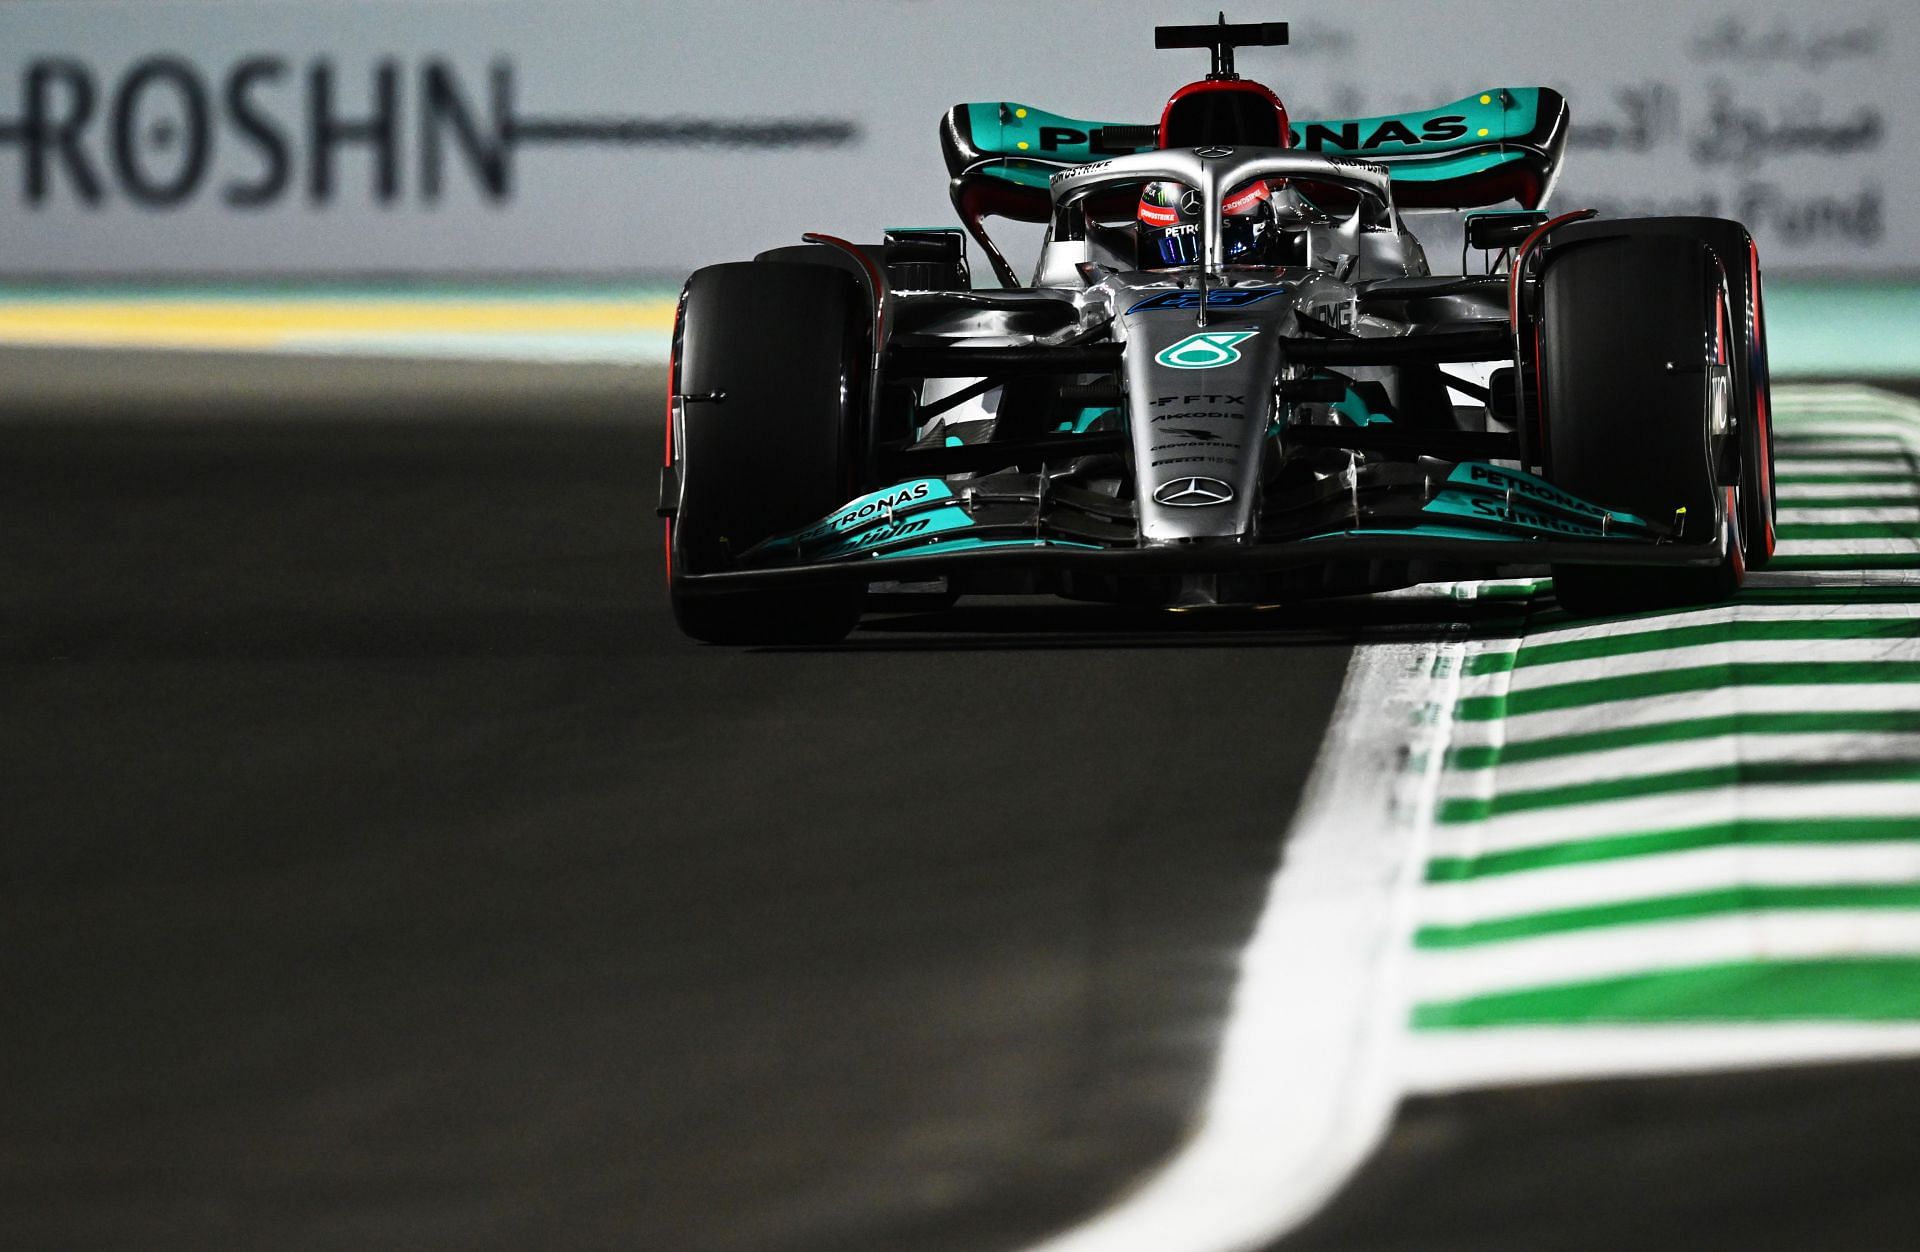 F1 Grand Prix of Saudi Arabia - Qualifying - Russell drives the W13 on track.